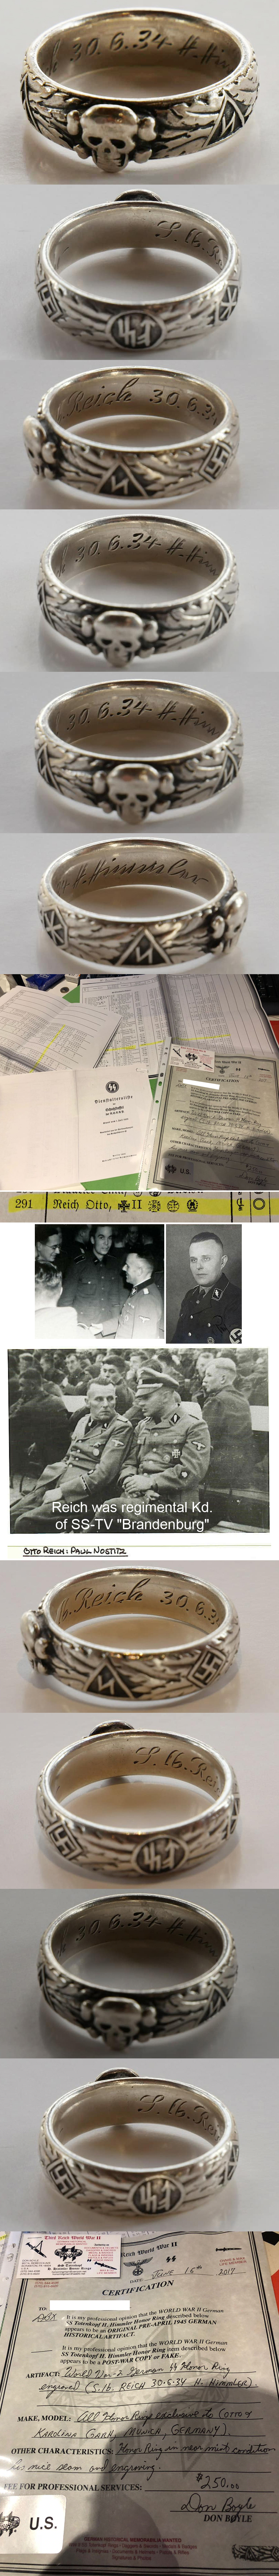 SS Honor Ring - SS-Oberführer Otto Reich 1934